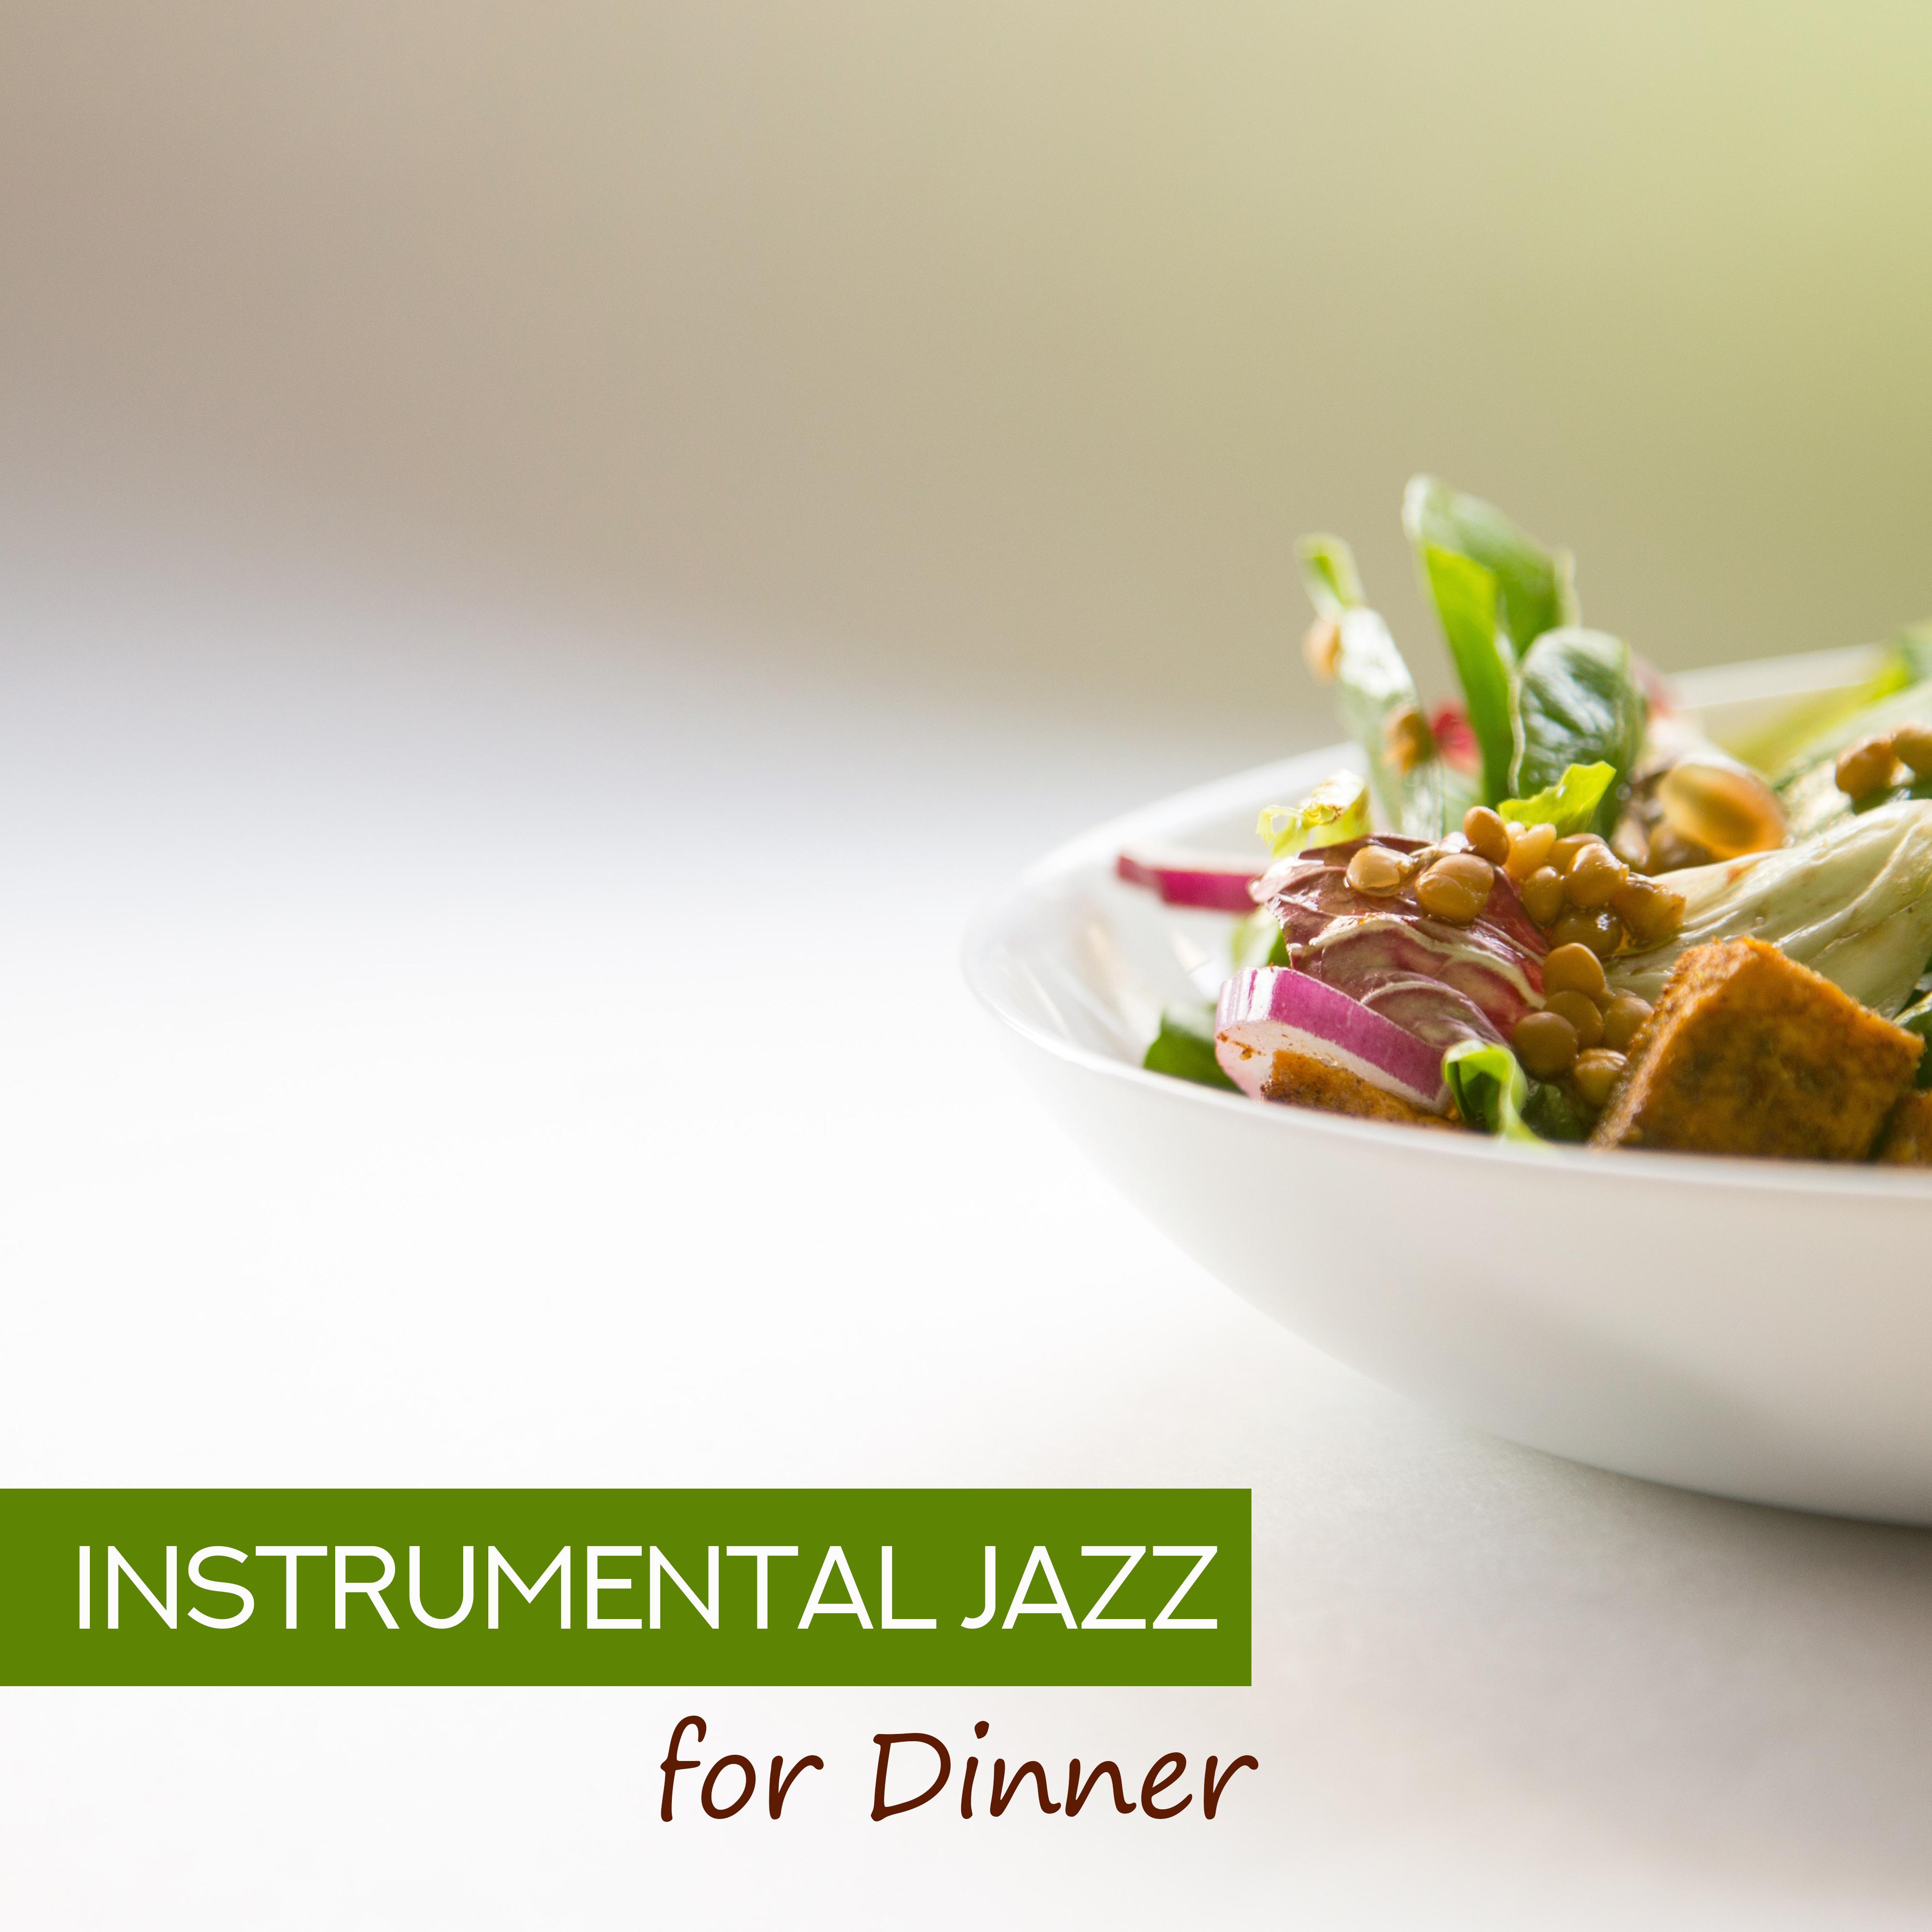 Instrumental Jazz for Dinner – Jazz Cafe, Pure Relax, Smooth Jazz to Calm Down, Coffee Talk